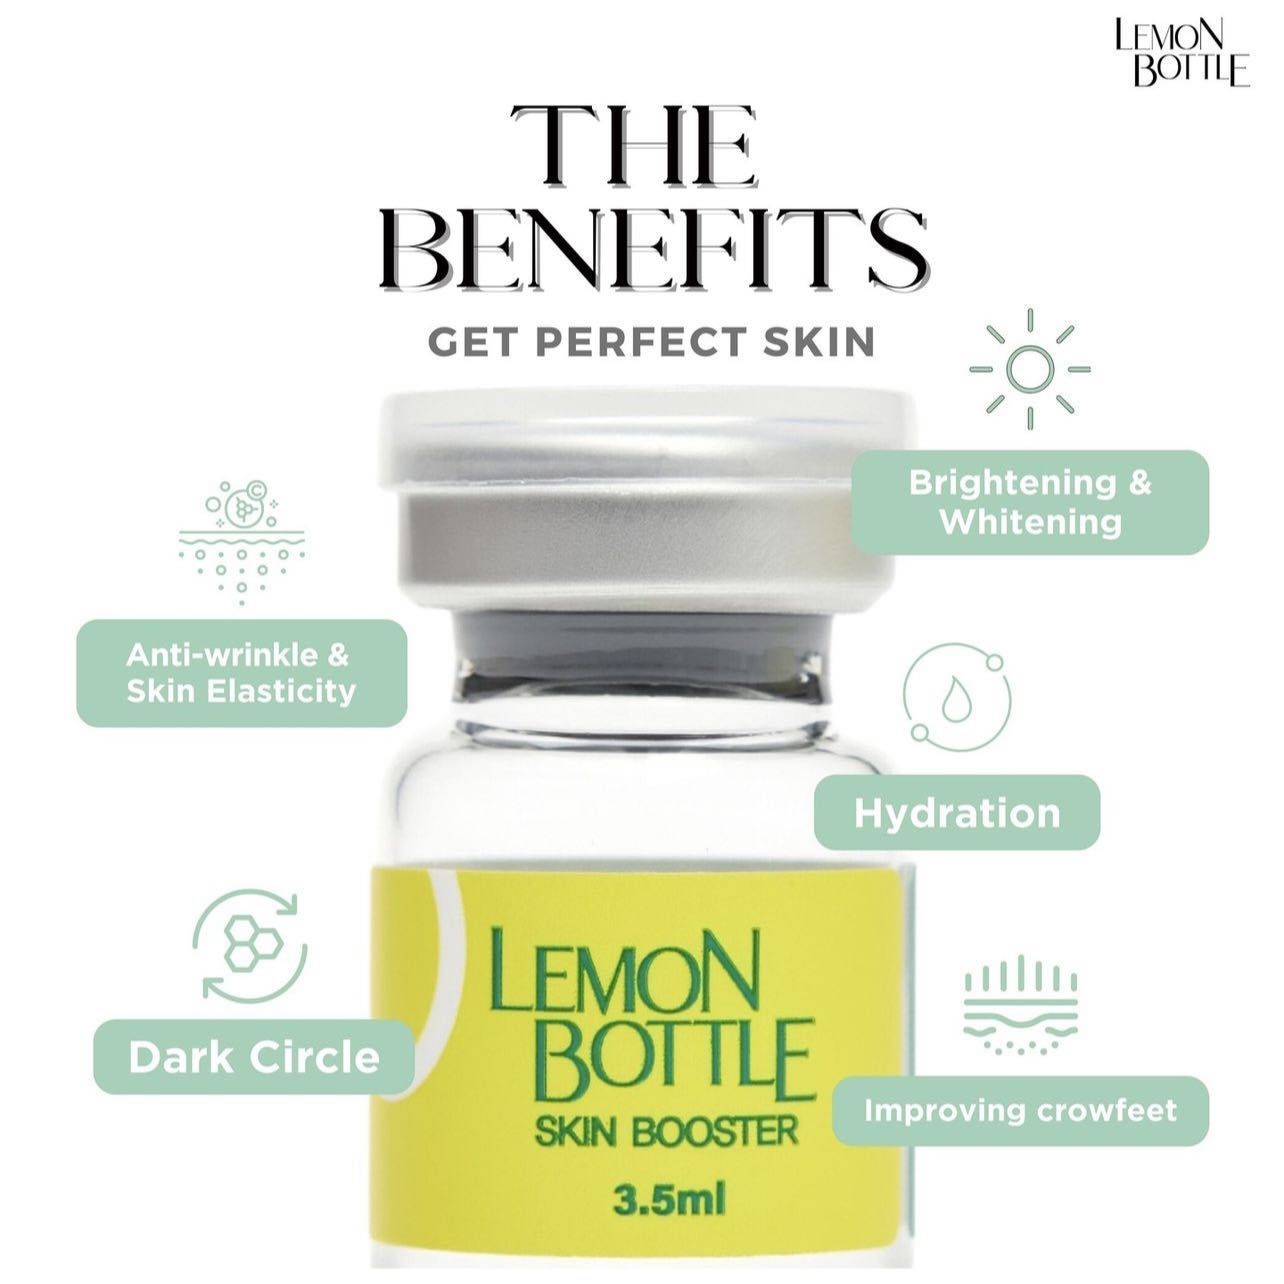 Microneedling with lemon bottle skin booster portfolio